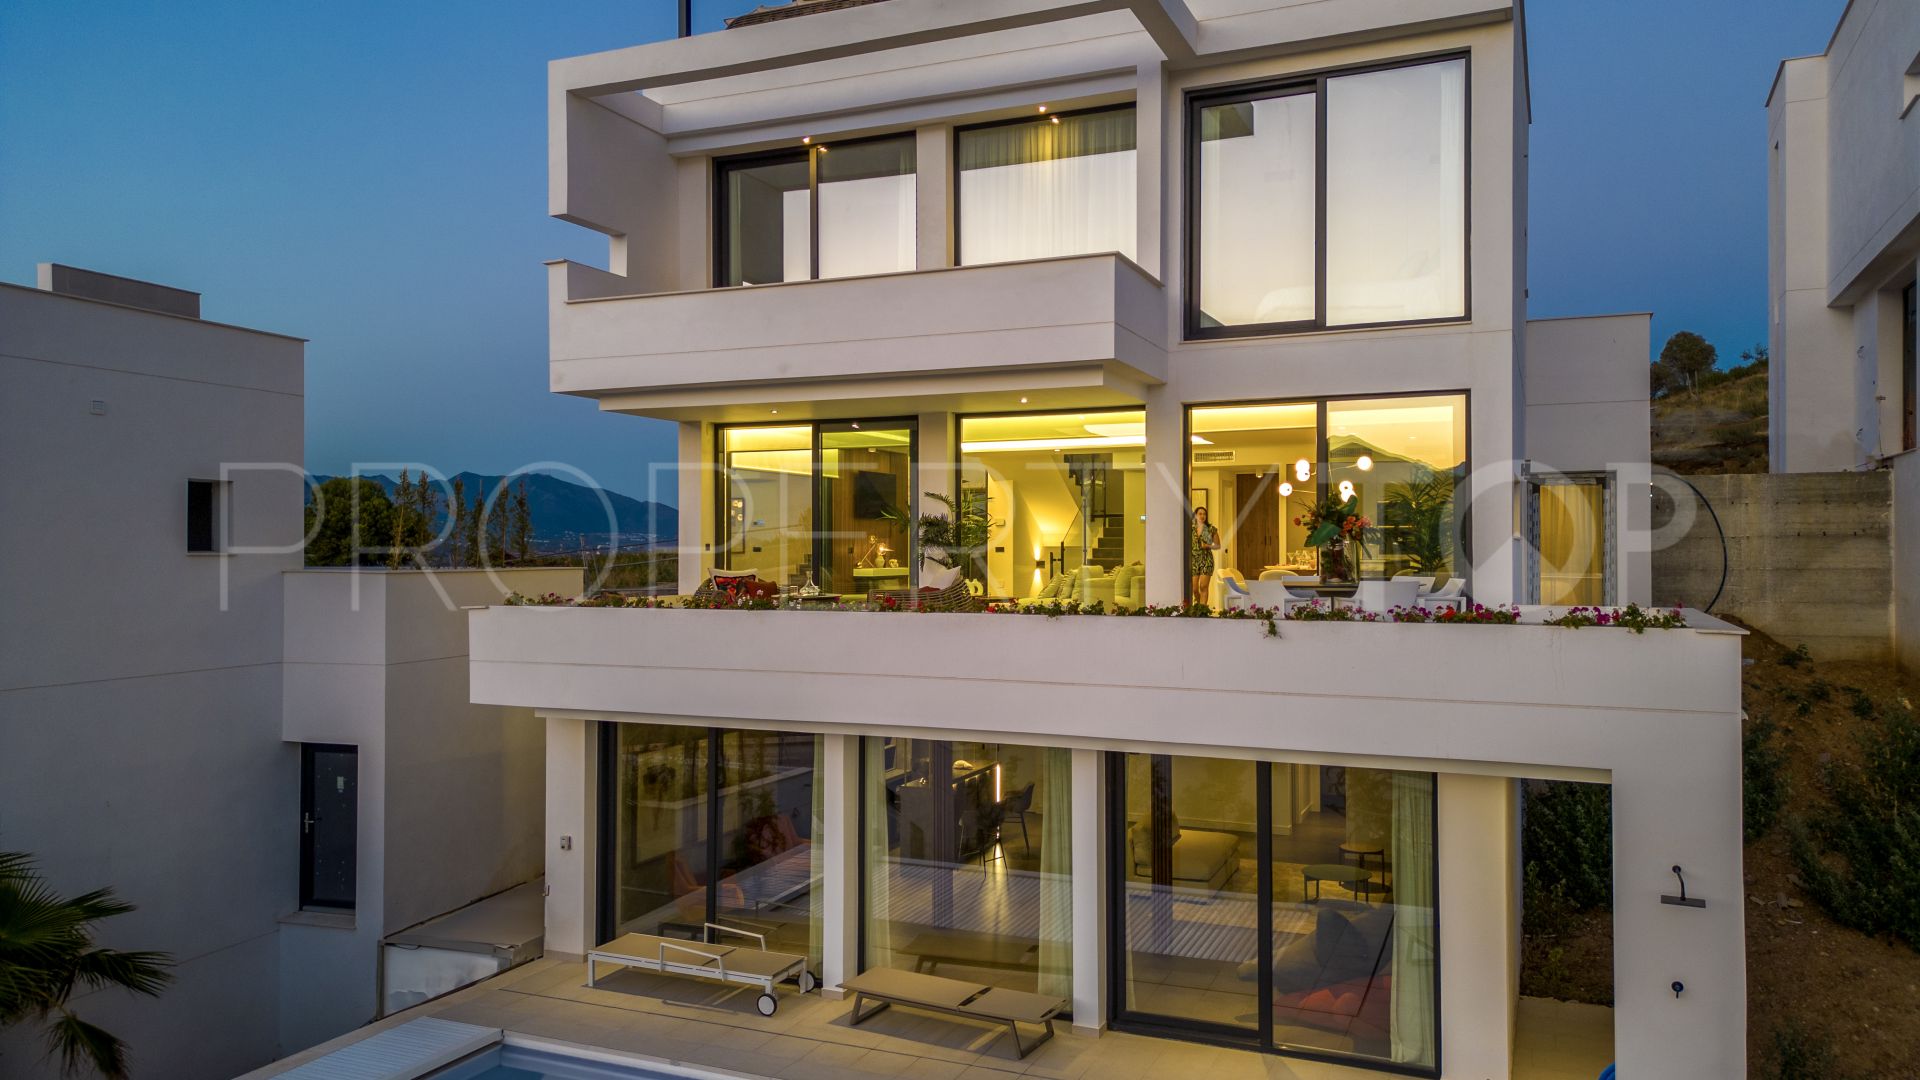 4 bedrooms villa for sale in La Cala Golf Resort